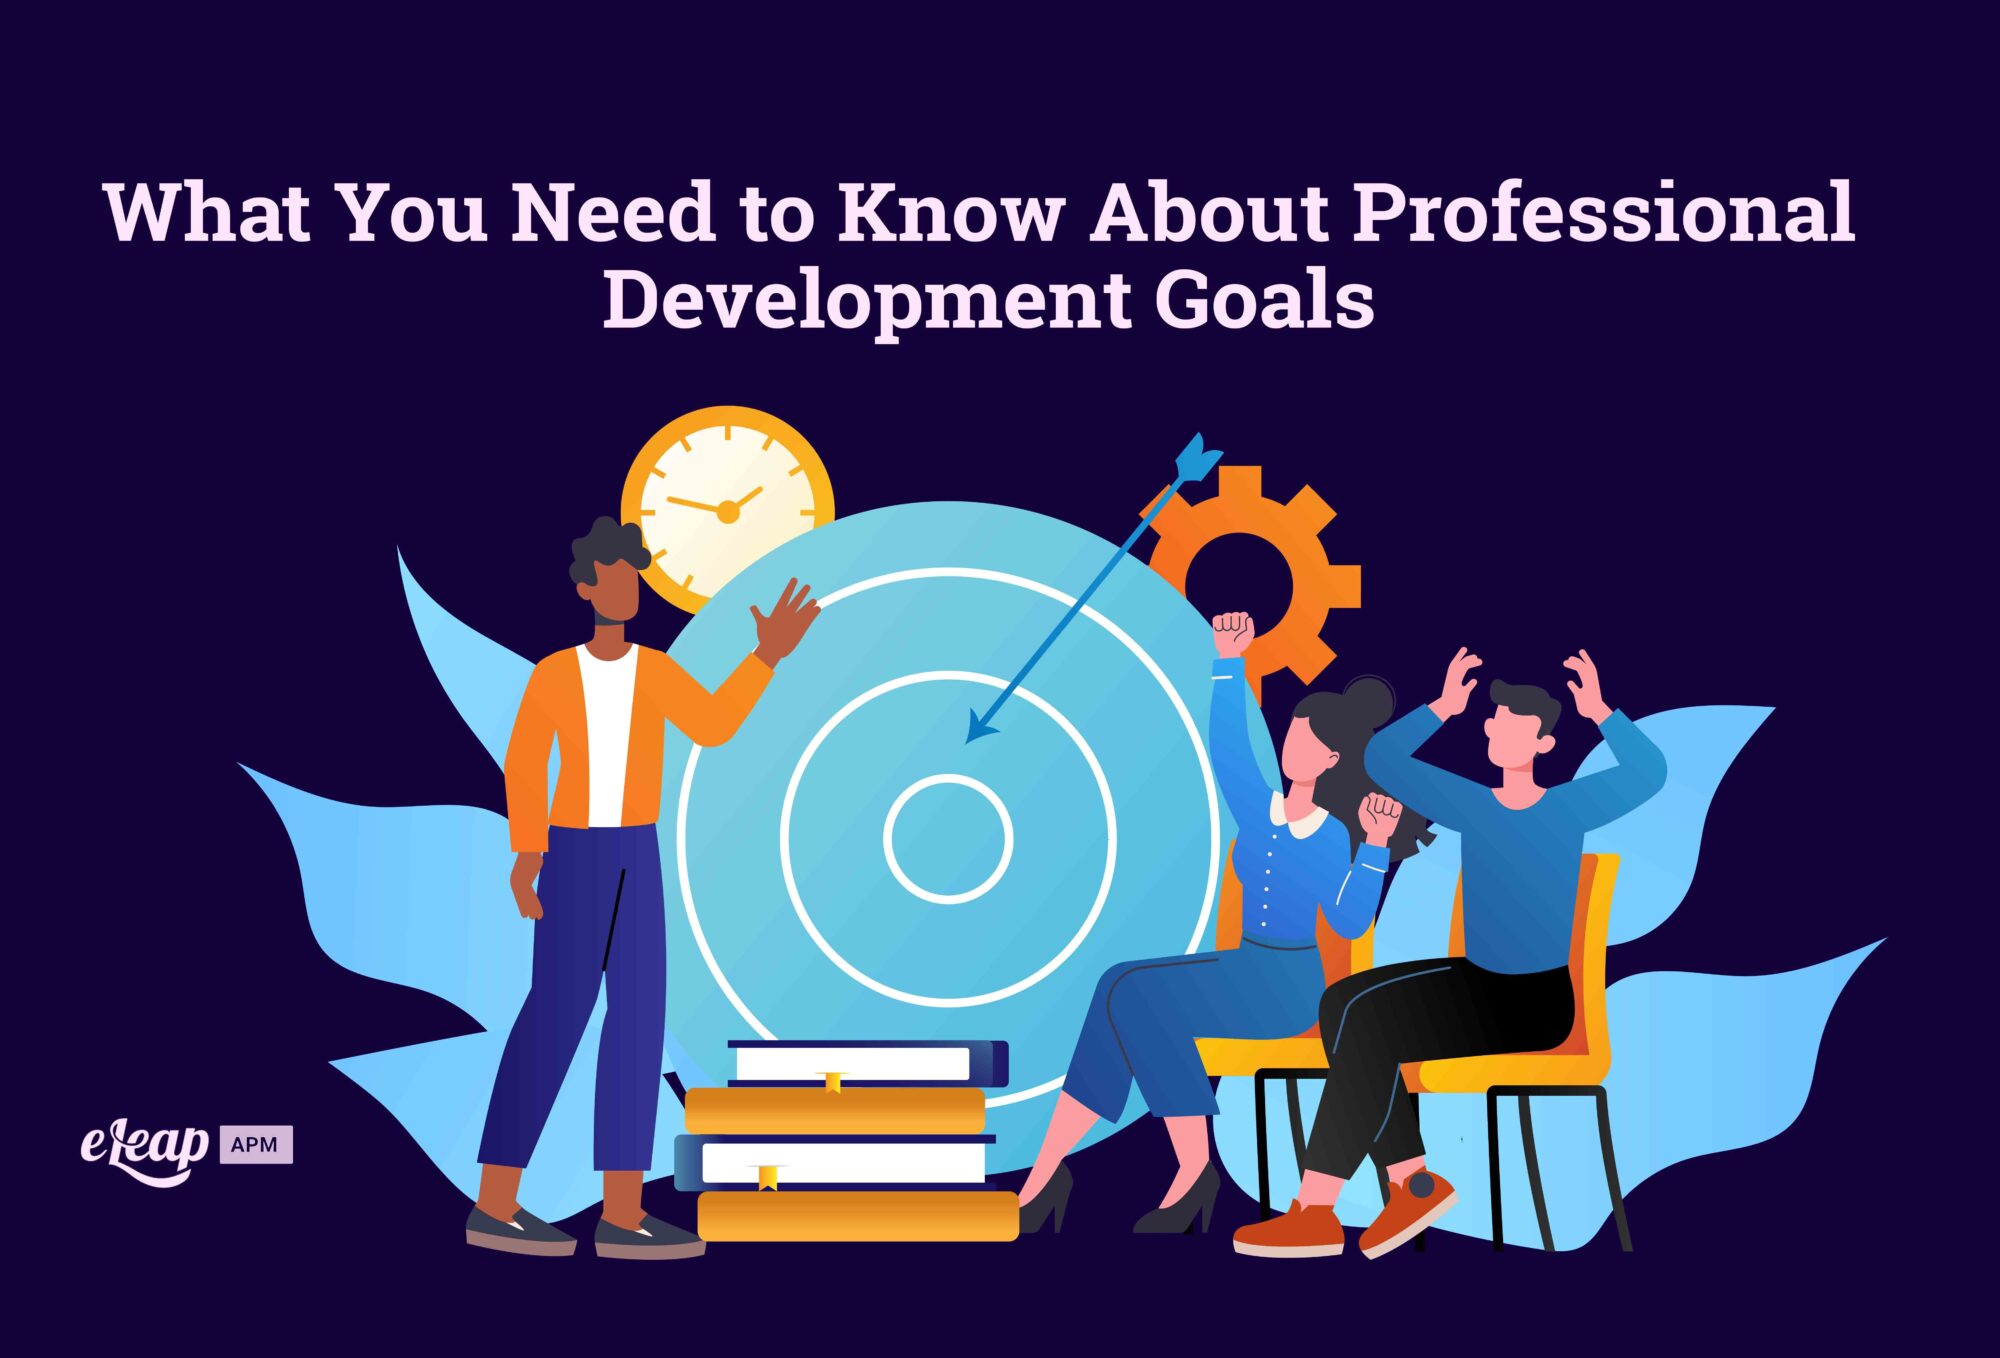 Professional Development Goals